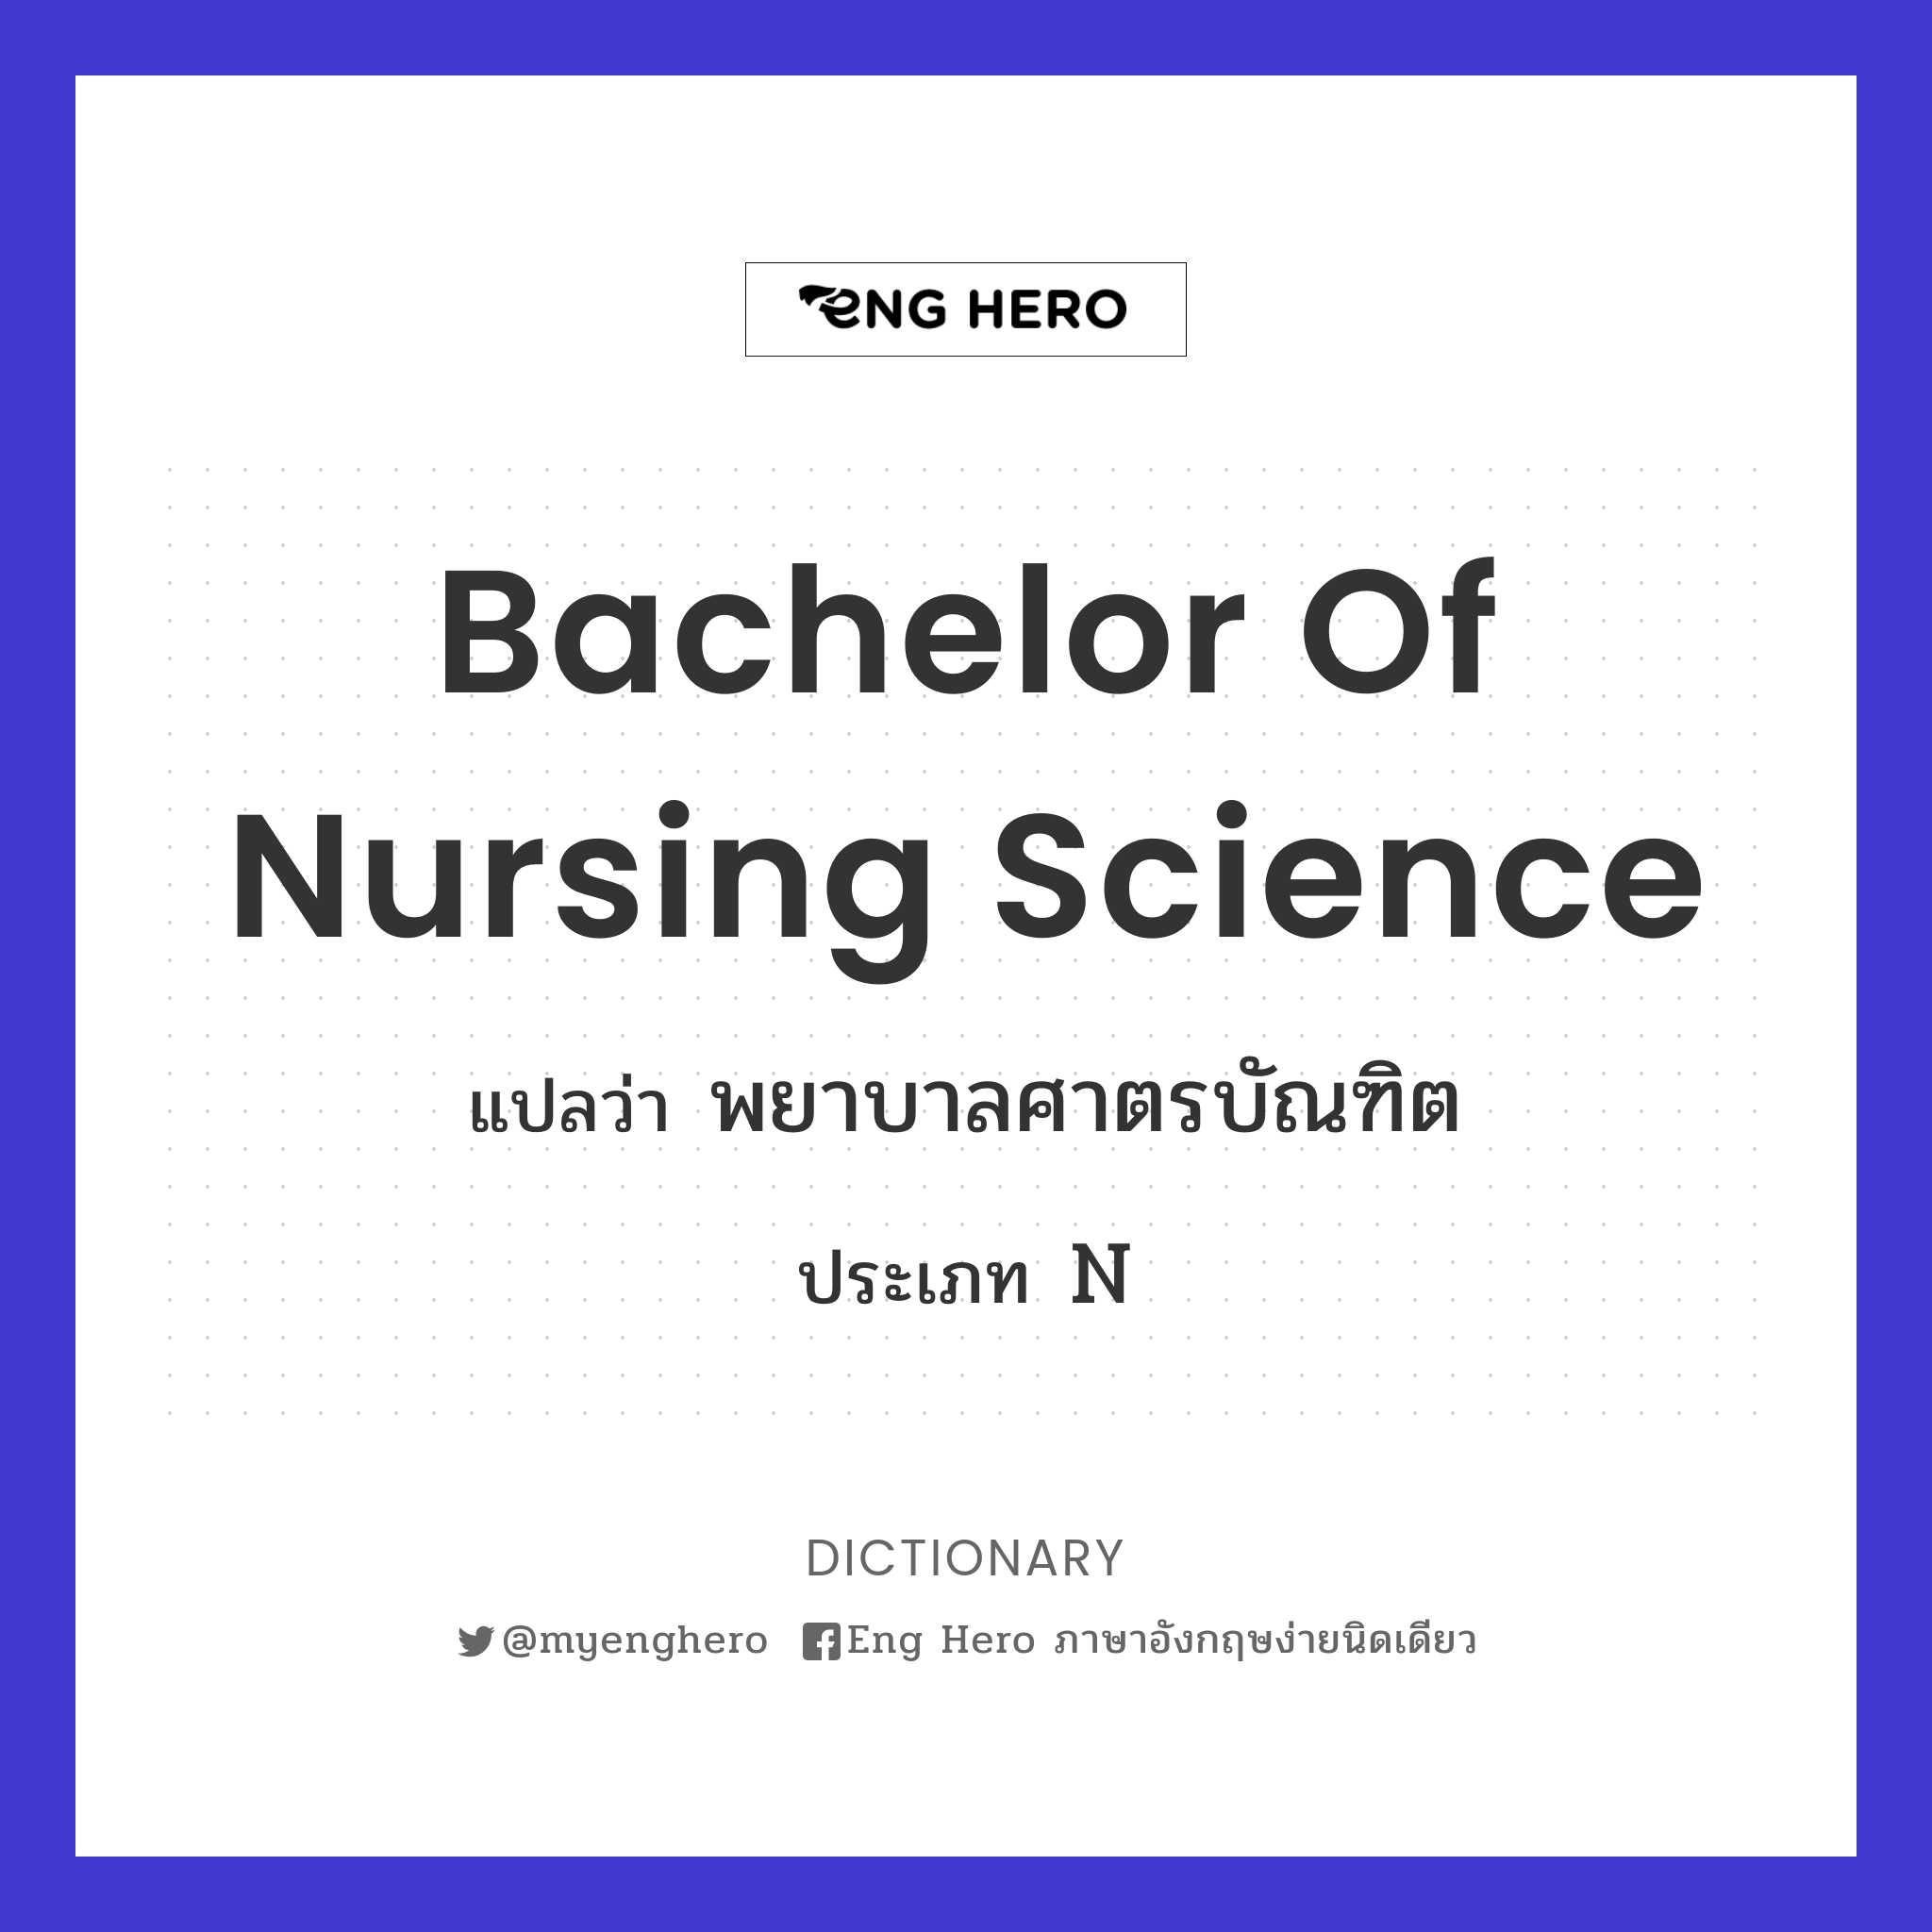 Bachelor of Nursing Science